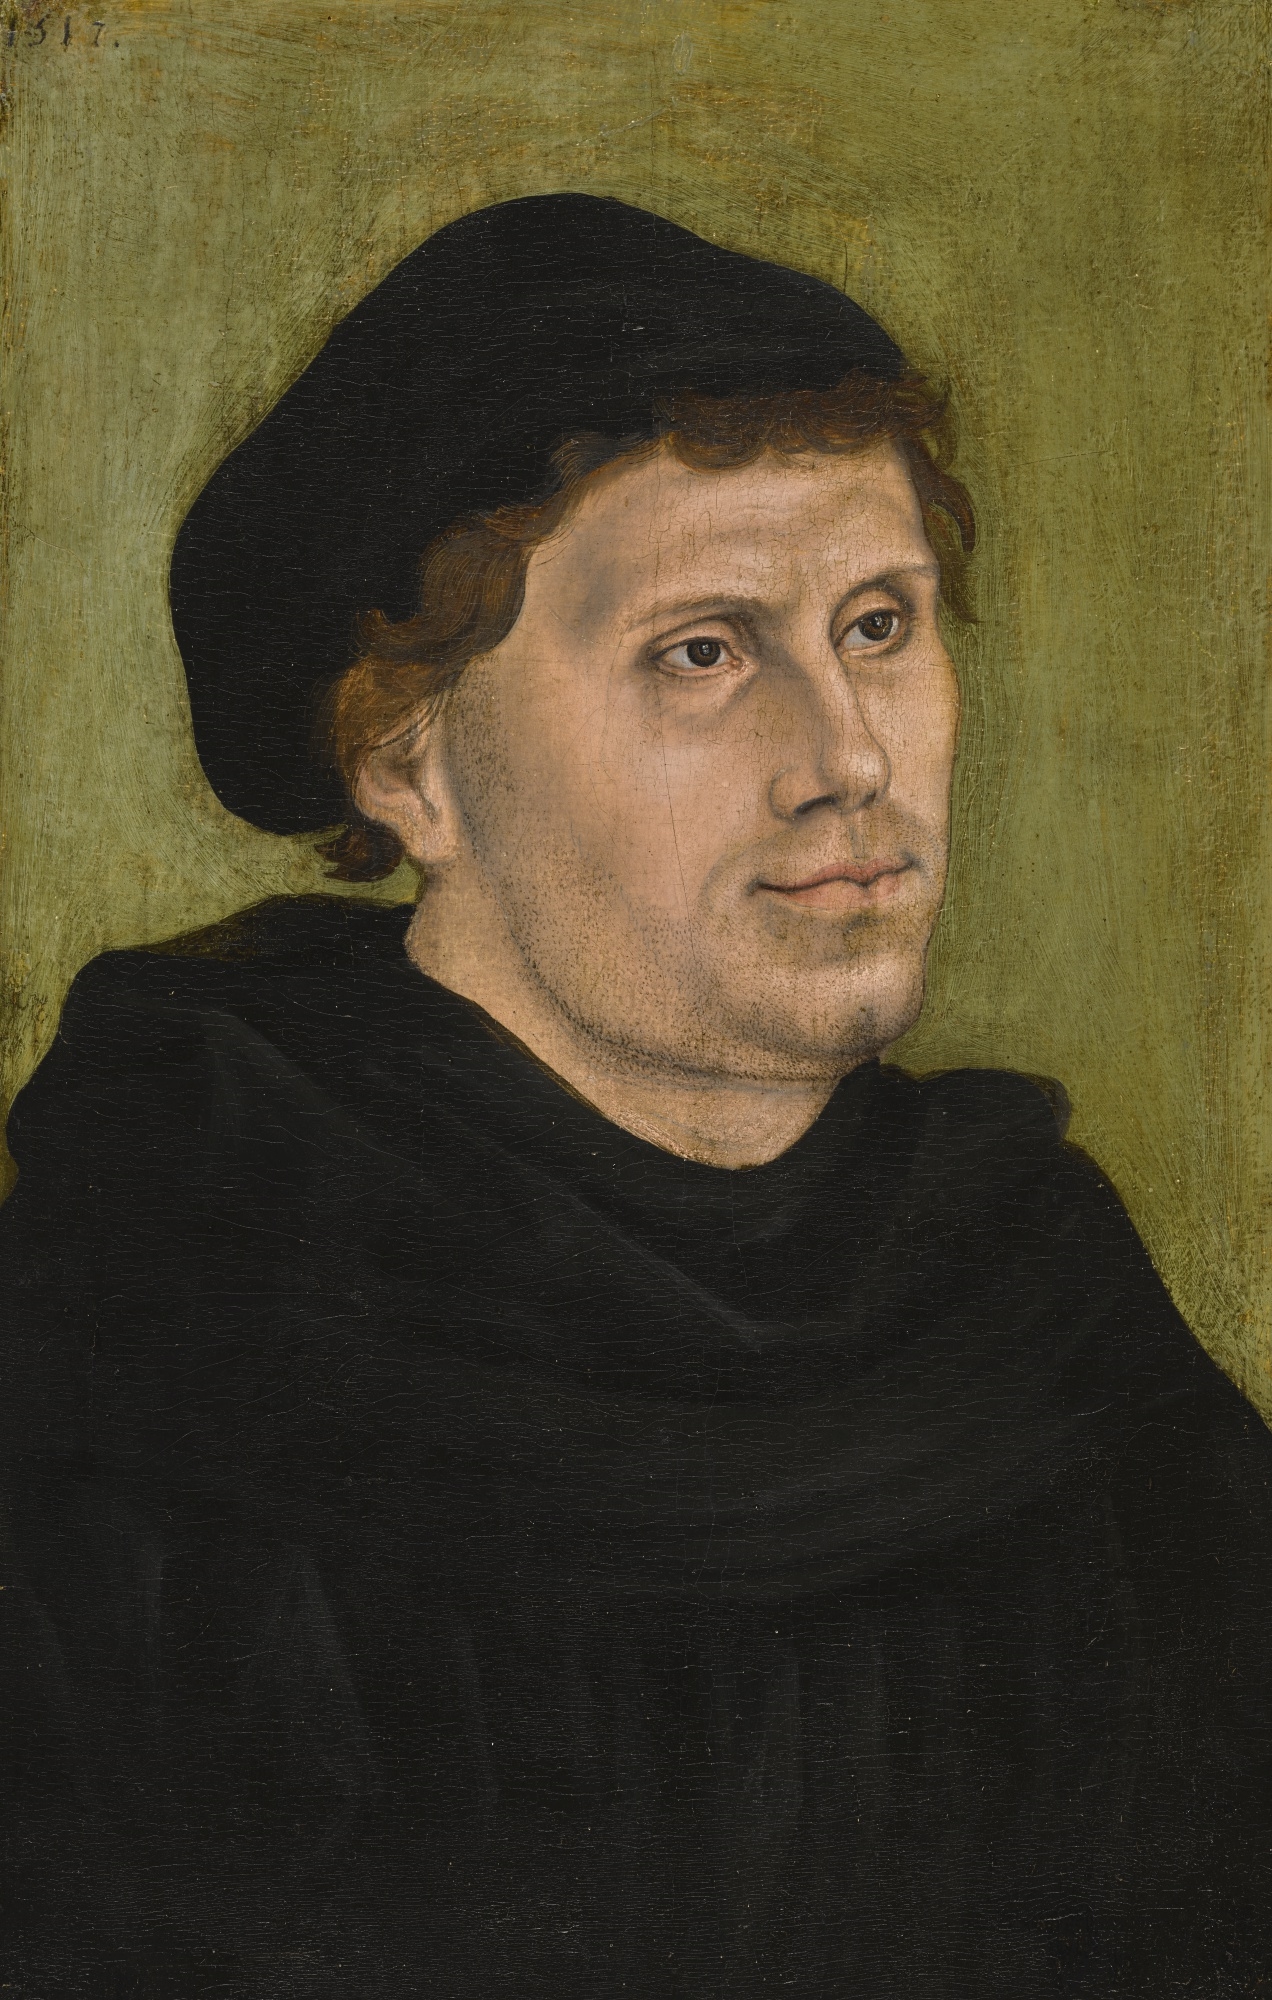 PORTRAIT OF MARTIN LUTHER (1483-1546) by Lucas Cranach the Elder, 1517